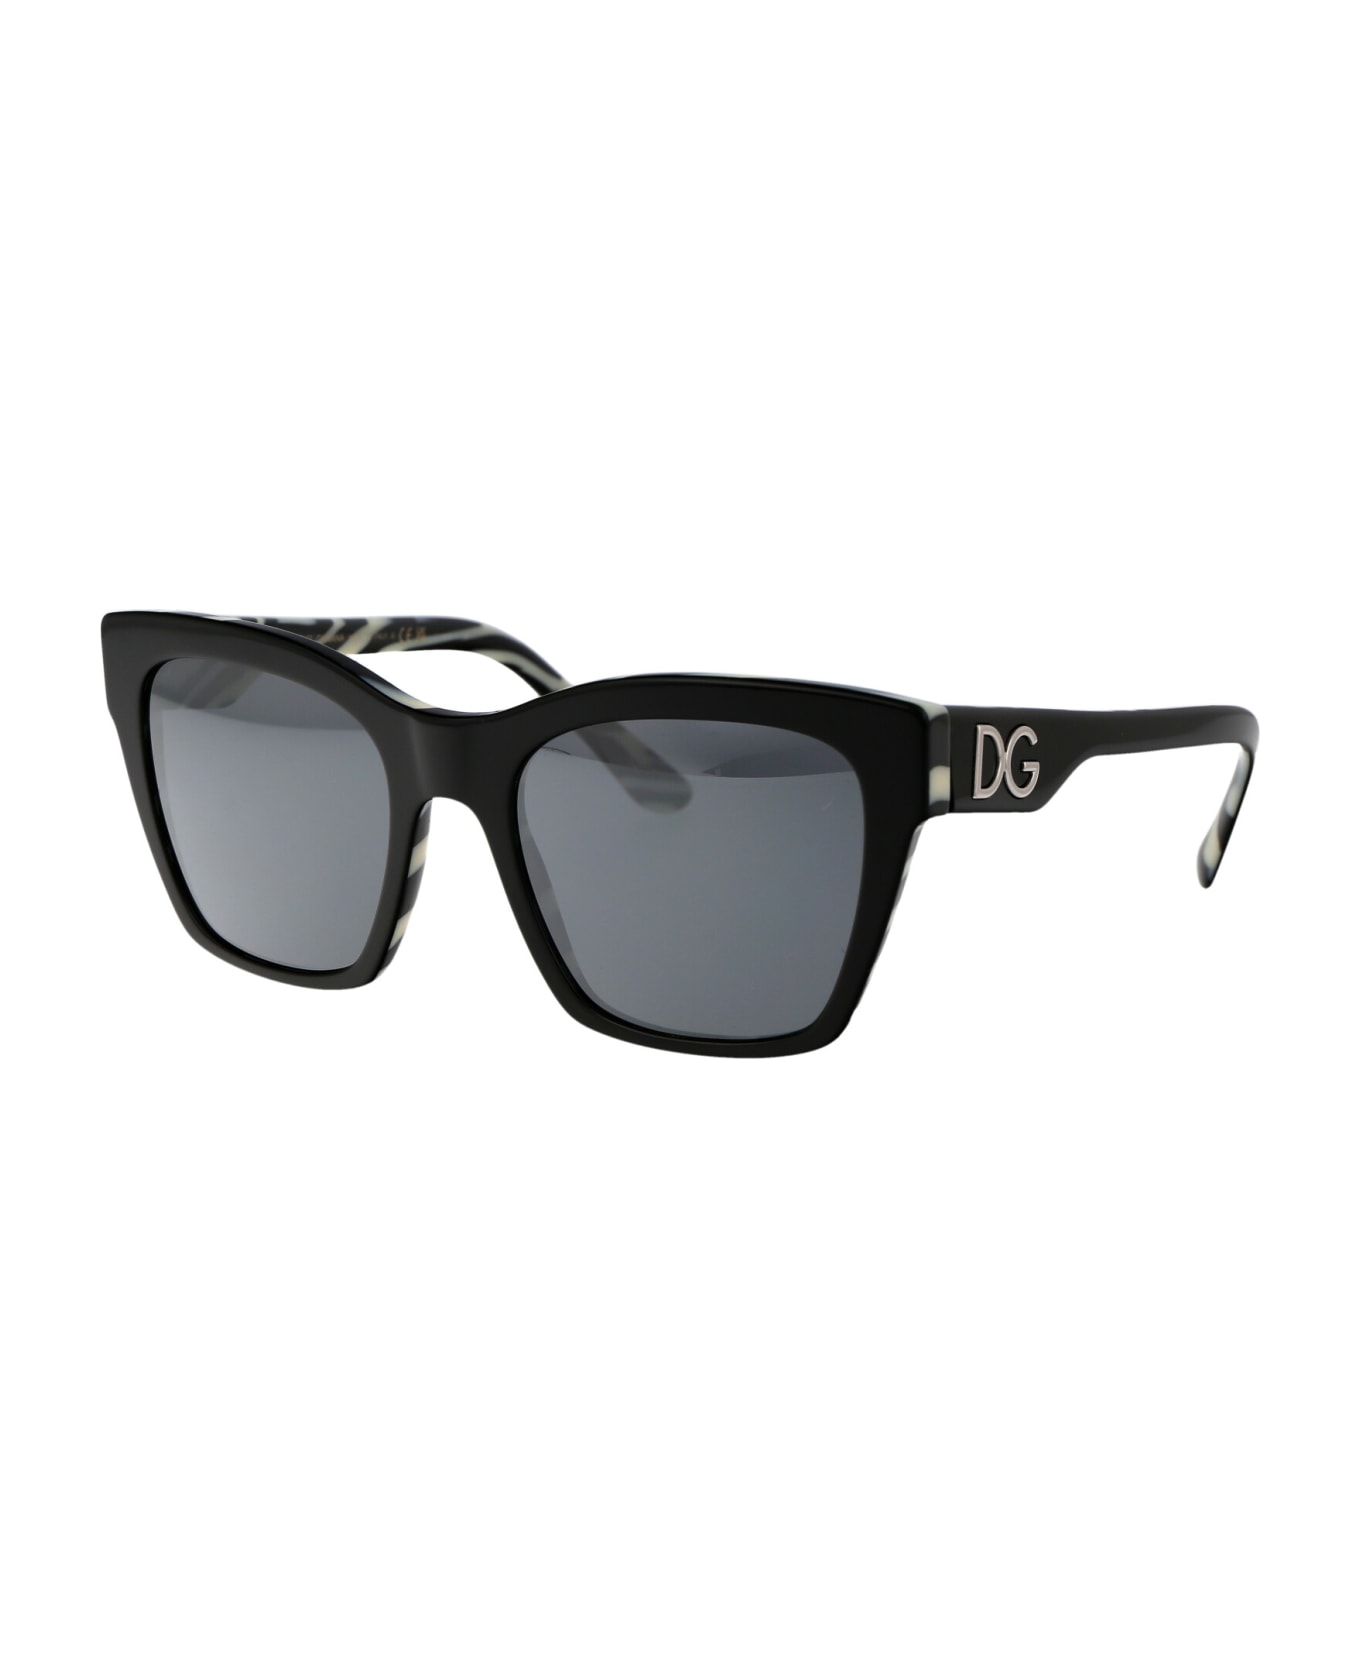 Dolce & Gabbana Eyewear 0dg4384 Sunglasses - 33726G Black On Zebra